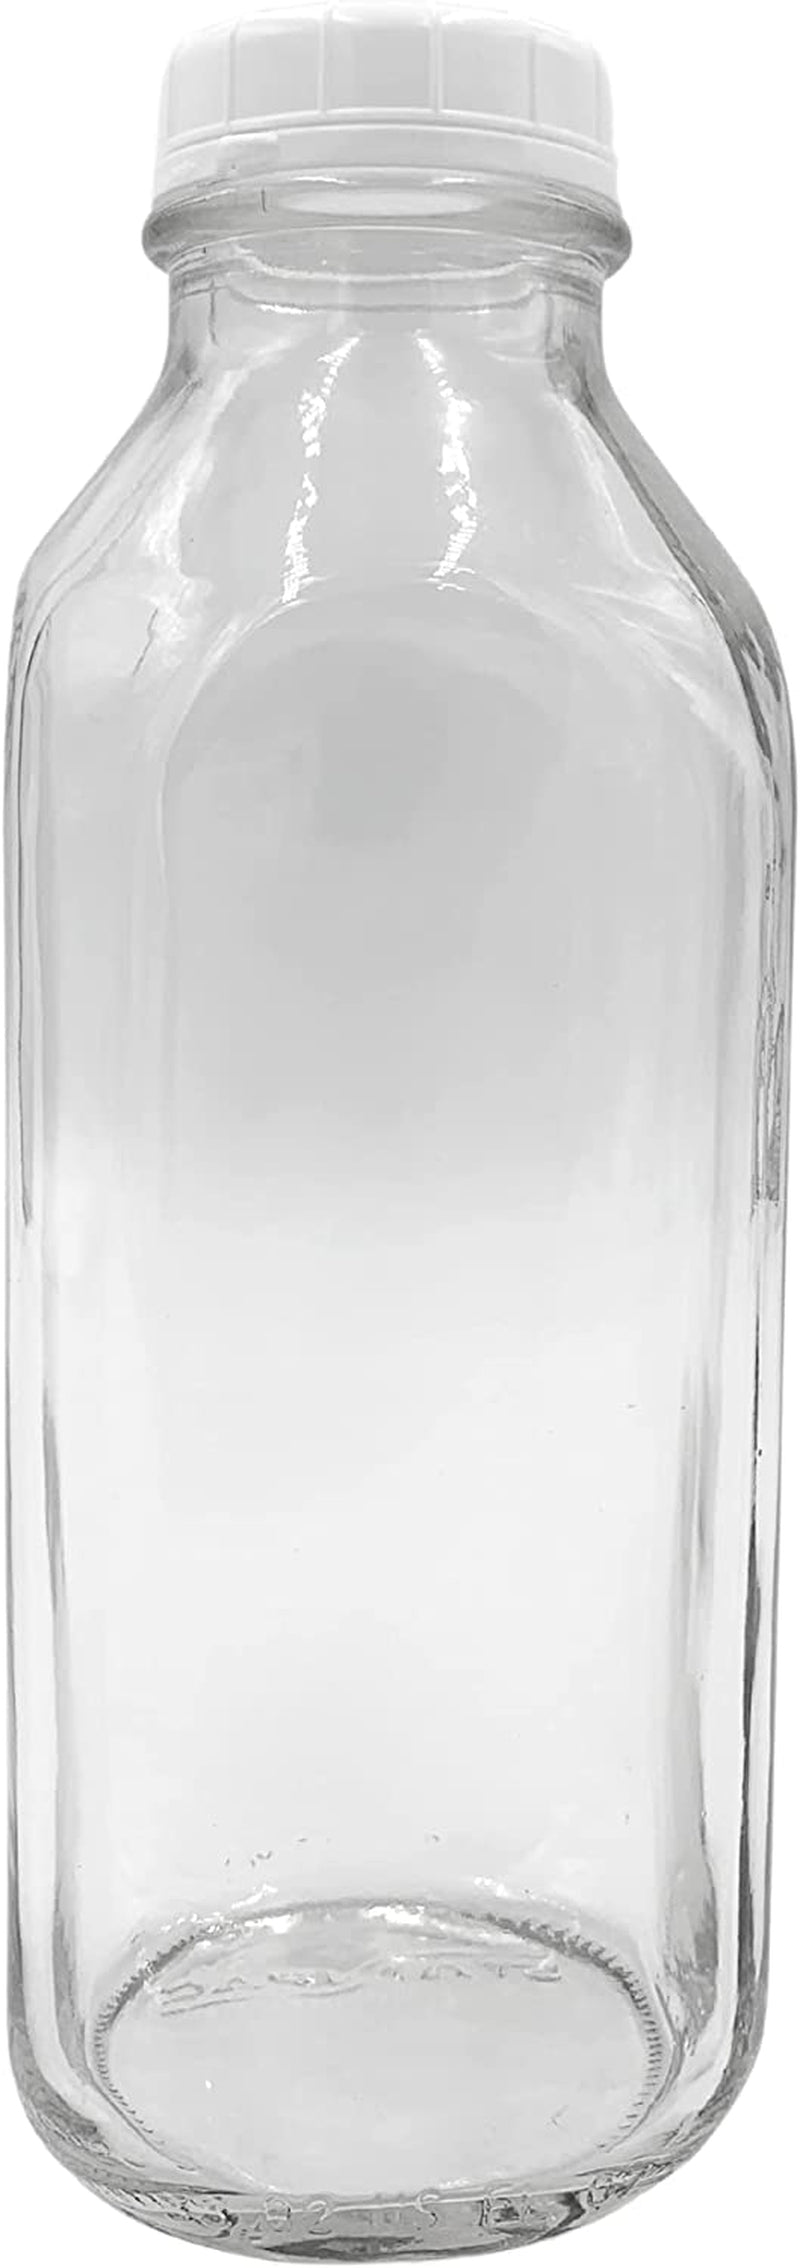 The Dairy Shoppe Heavy Glass Milk Bottles 33.8 Oz Jugs with Extra Lids & NEW Pour Spout! (2, 33.8 Oz) Home & Garden > Decor > Decorative Jars The Dairy Shoppe 1 33.8 oz 